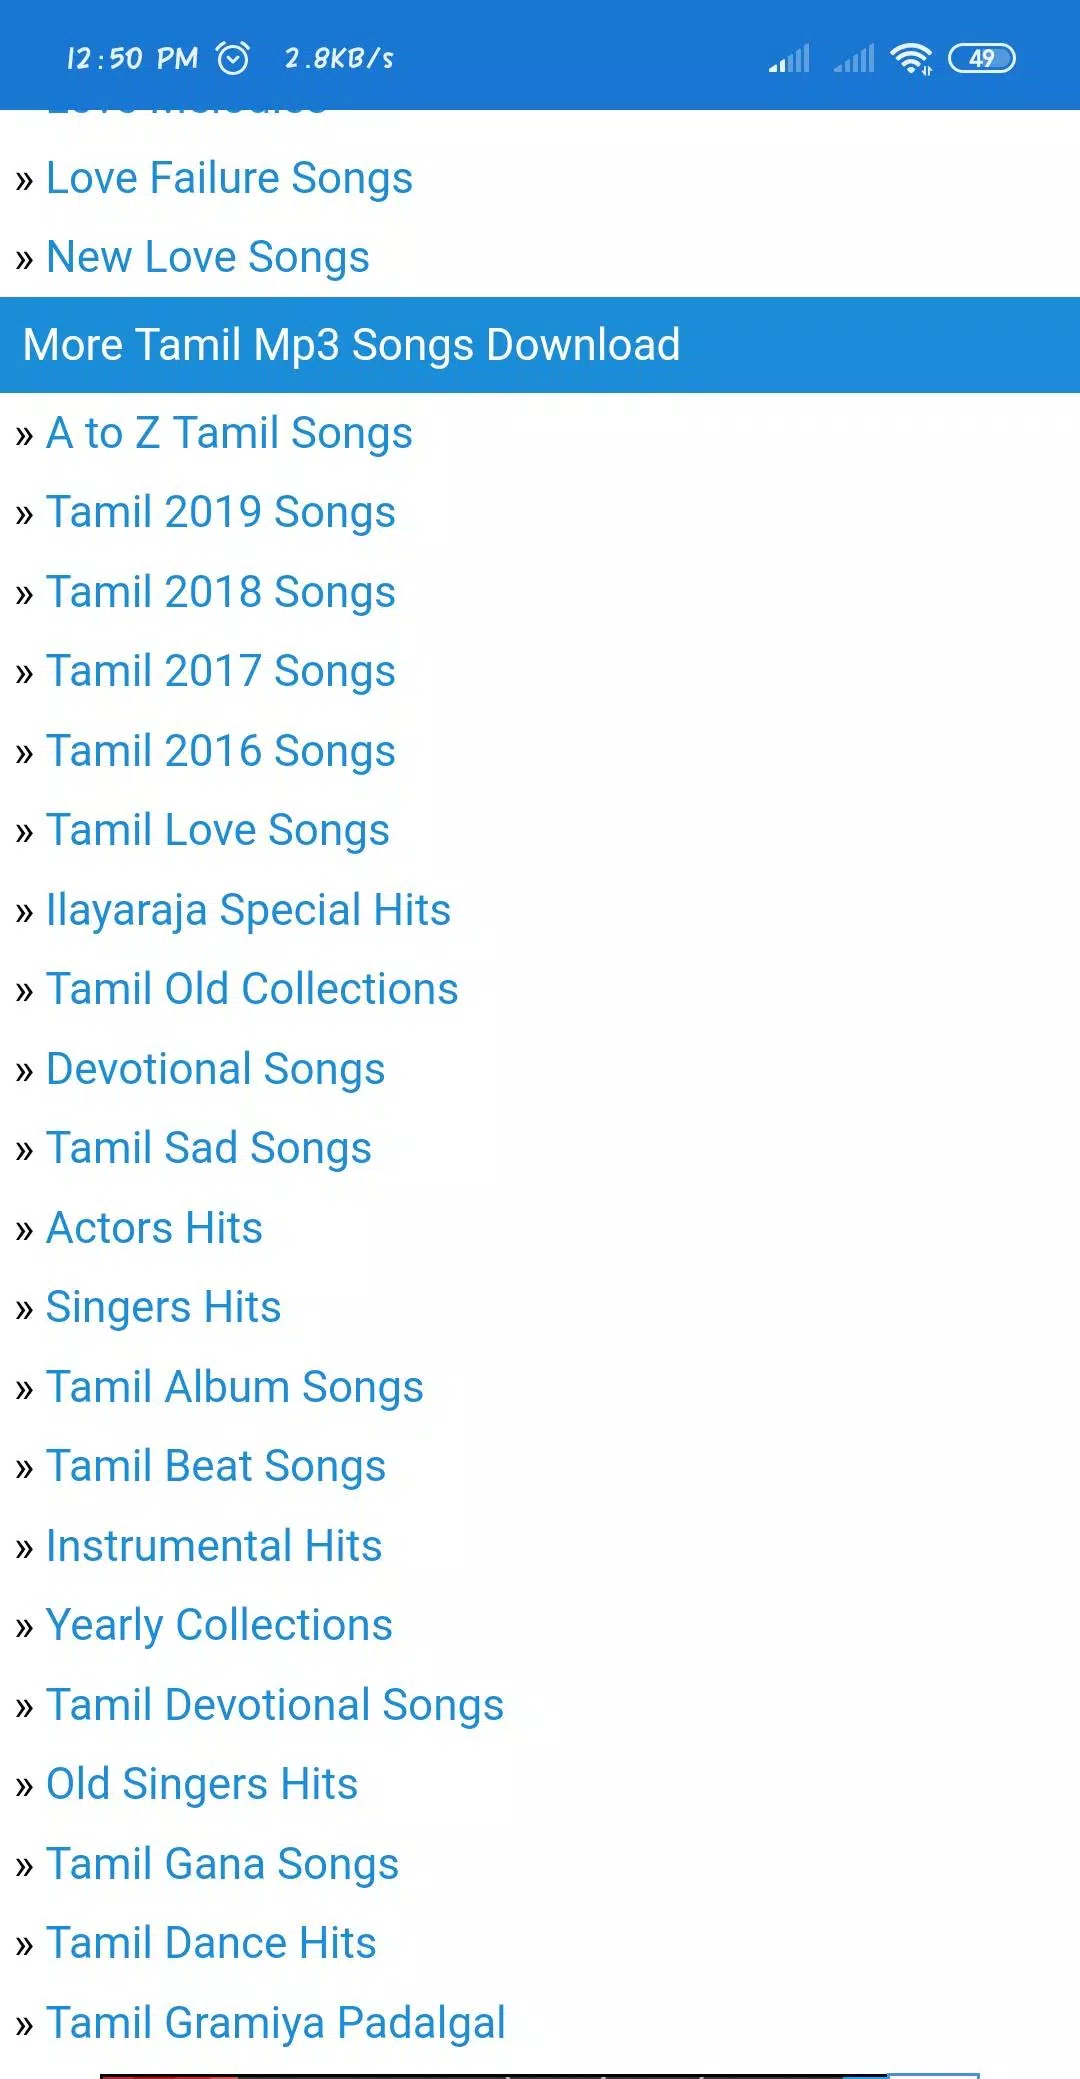 Anden klasse Melting finger tamil mp3 songs free download app APK for Android Download